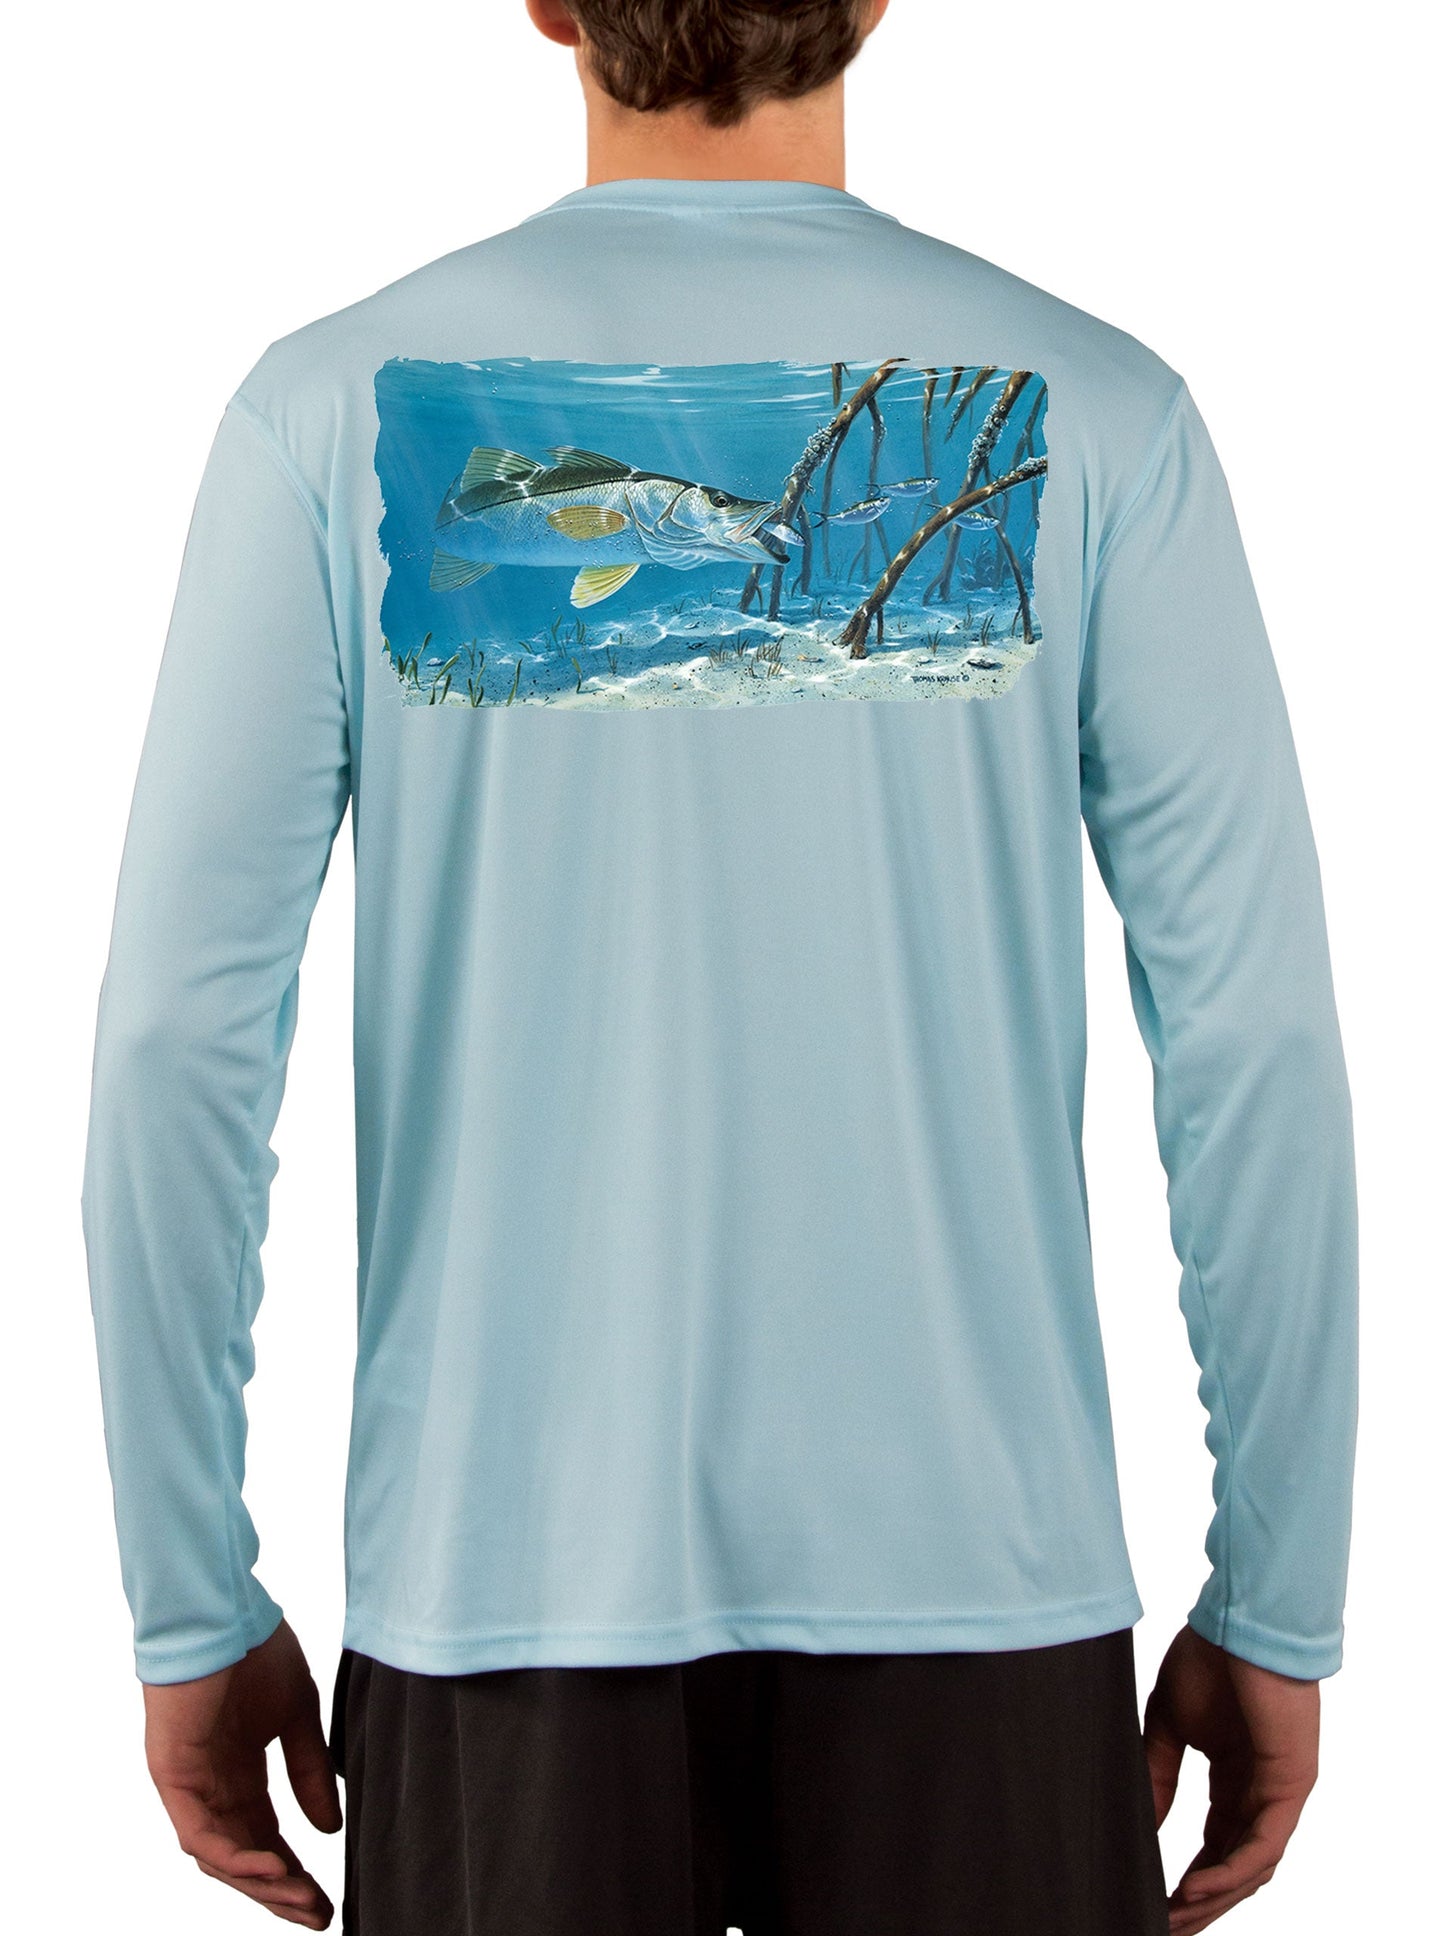 Fishing Shirts for Men Mangrove Snook By Award Winning Artist Thomas Krause - Skiff Life